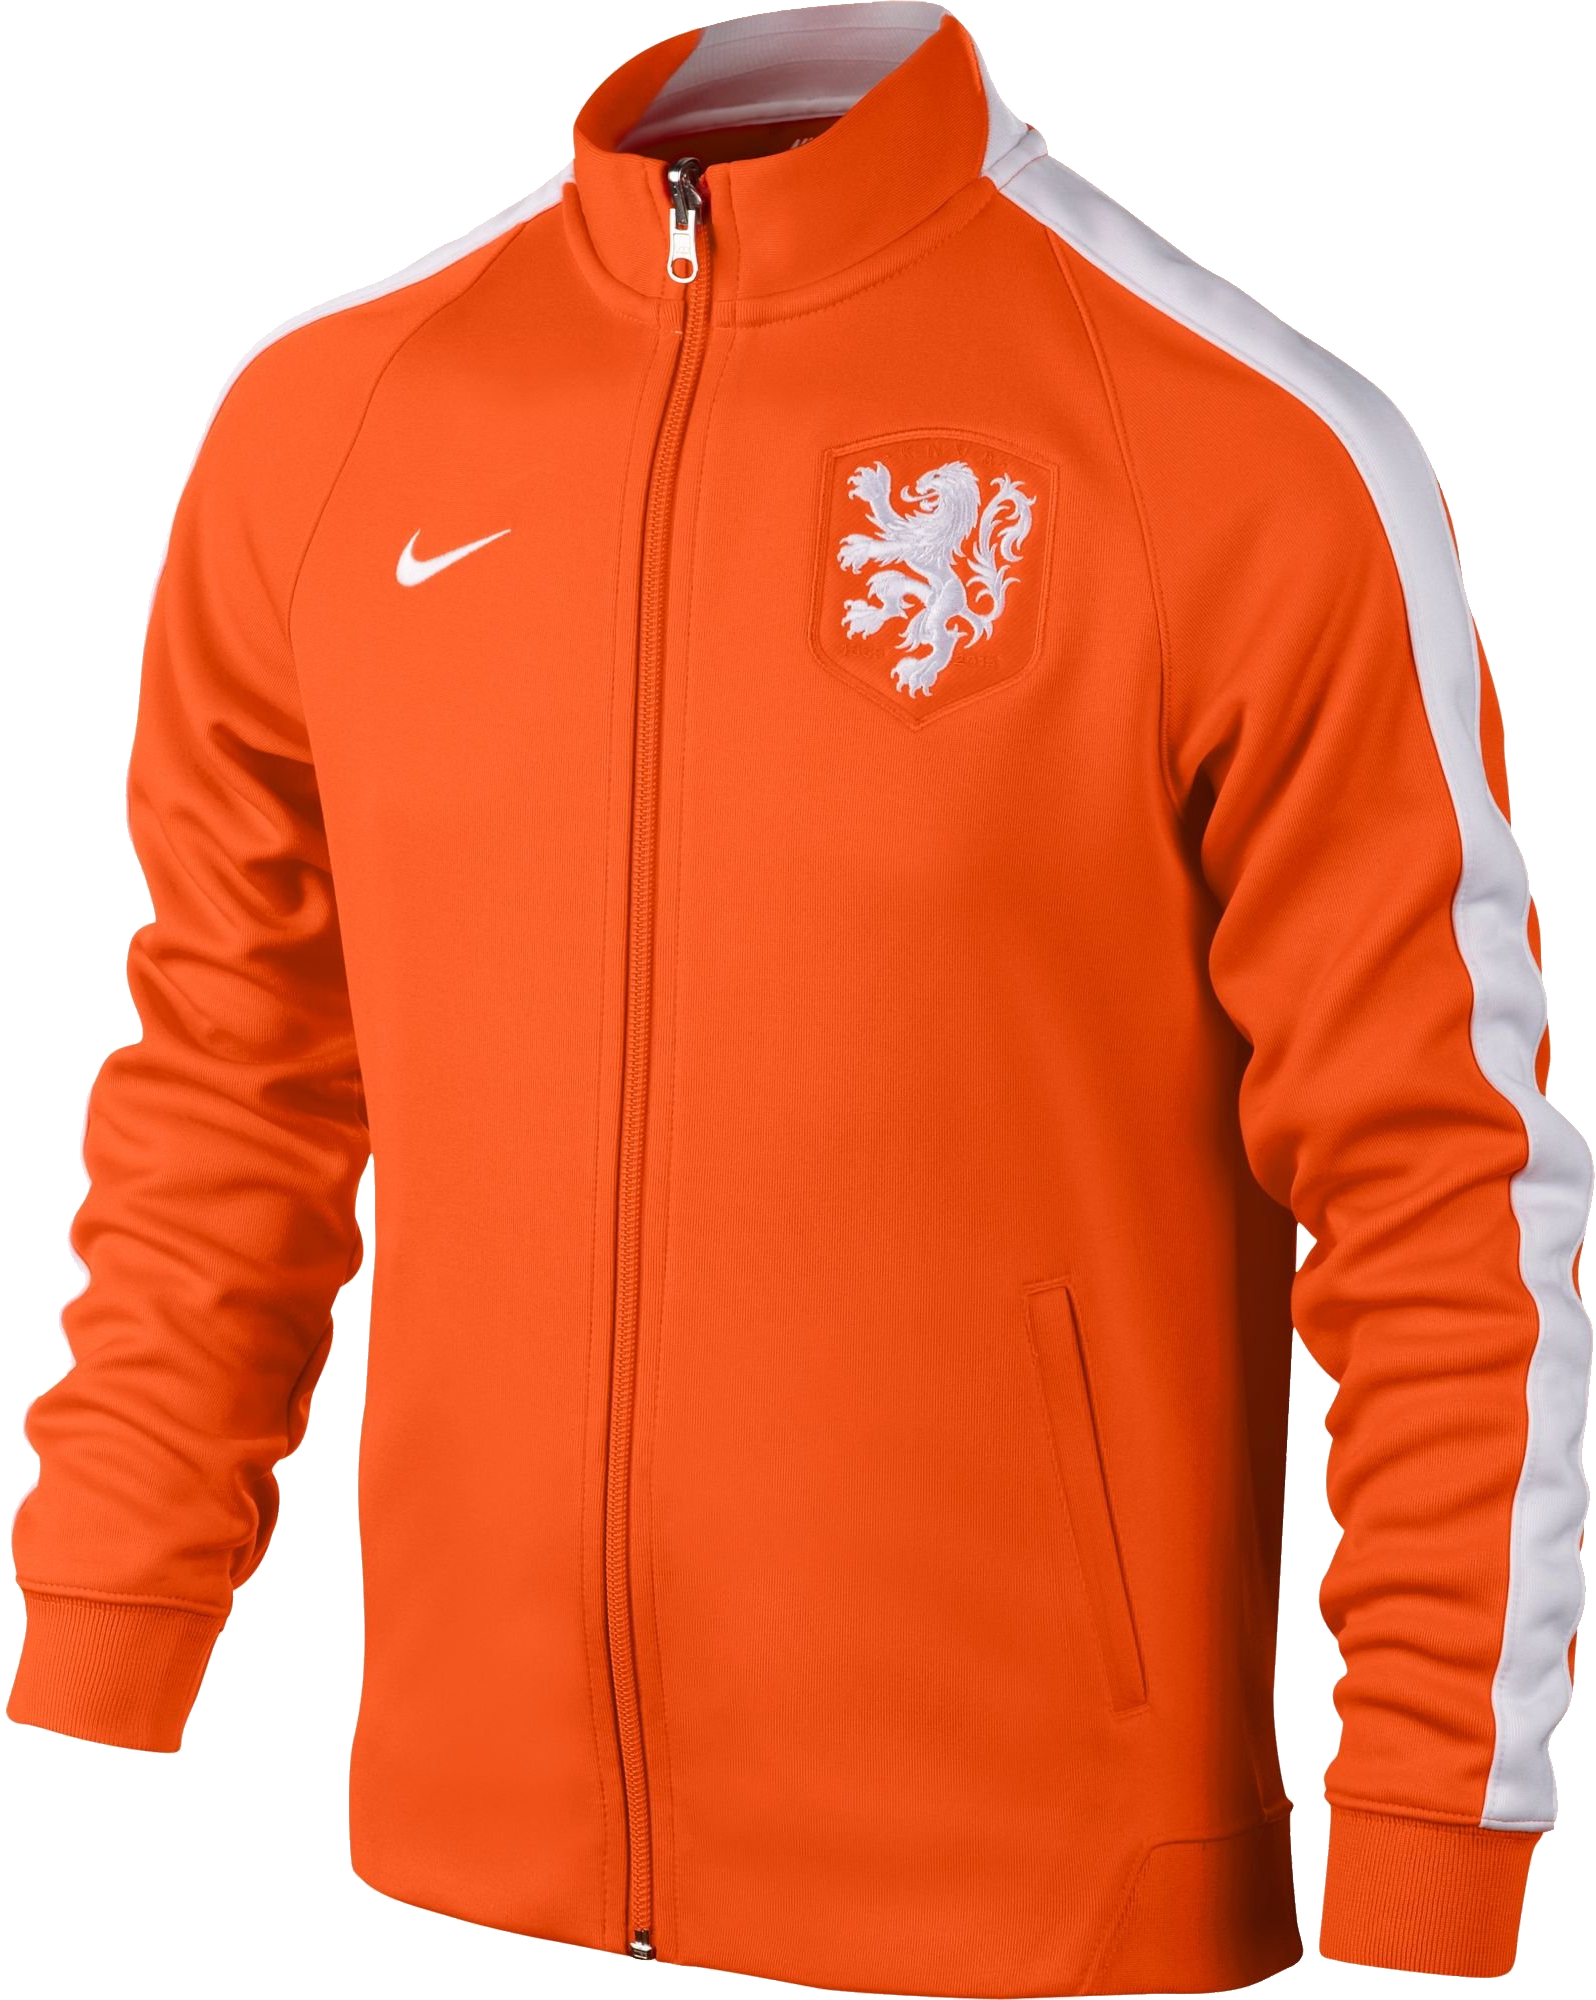 नारंगी जैकेट